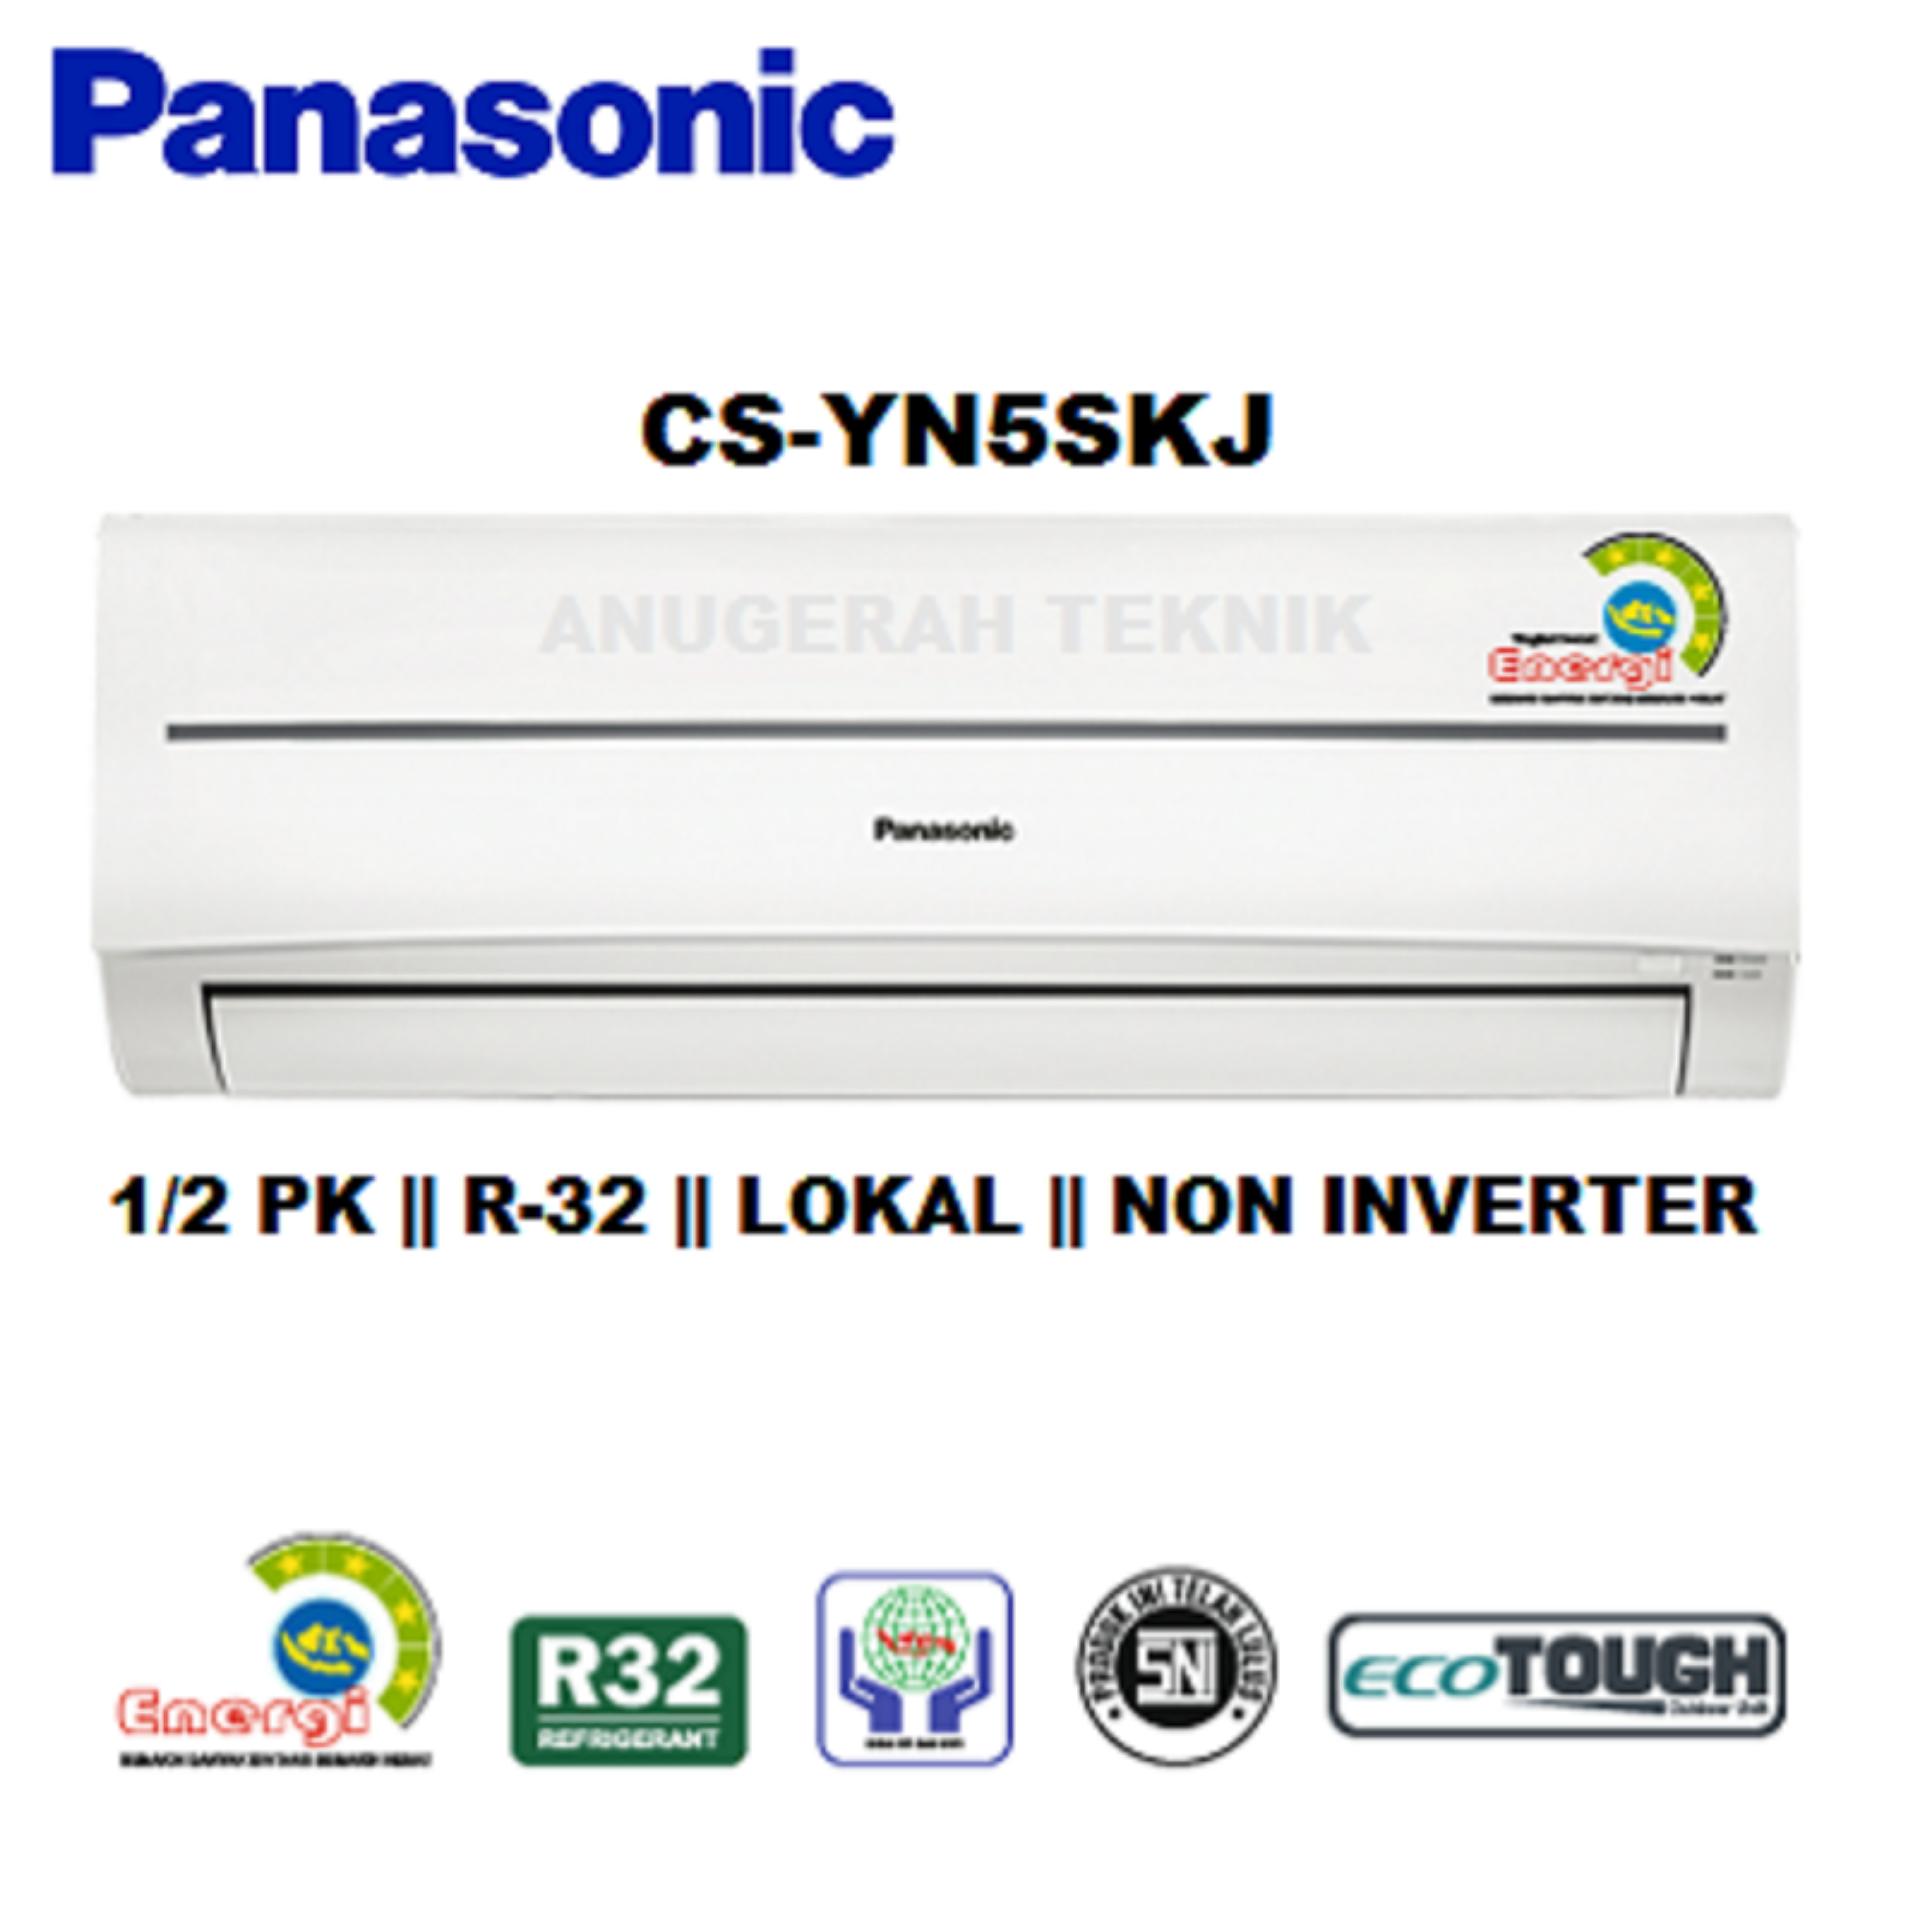 Panasonic AC Split 1/2 PK Standard Lokal R32 Non Inverter - YN5SKJ